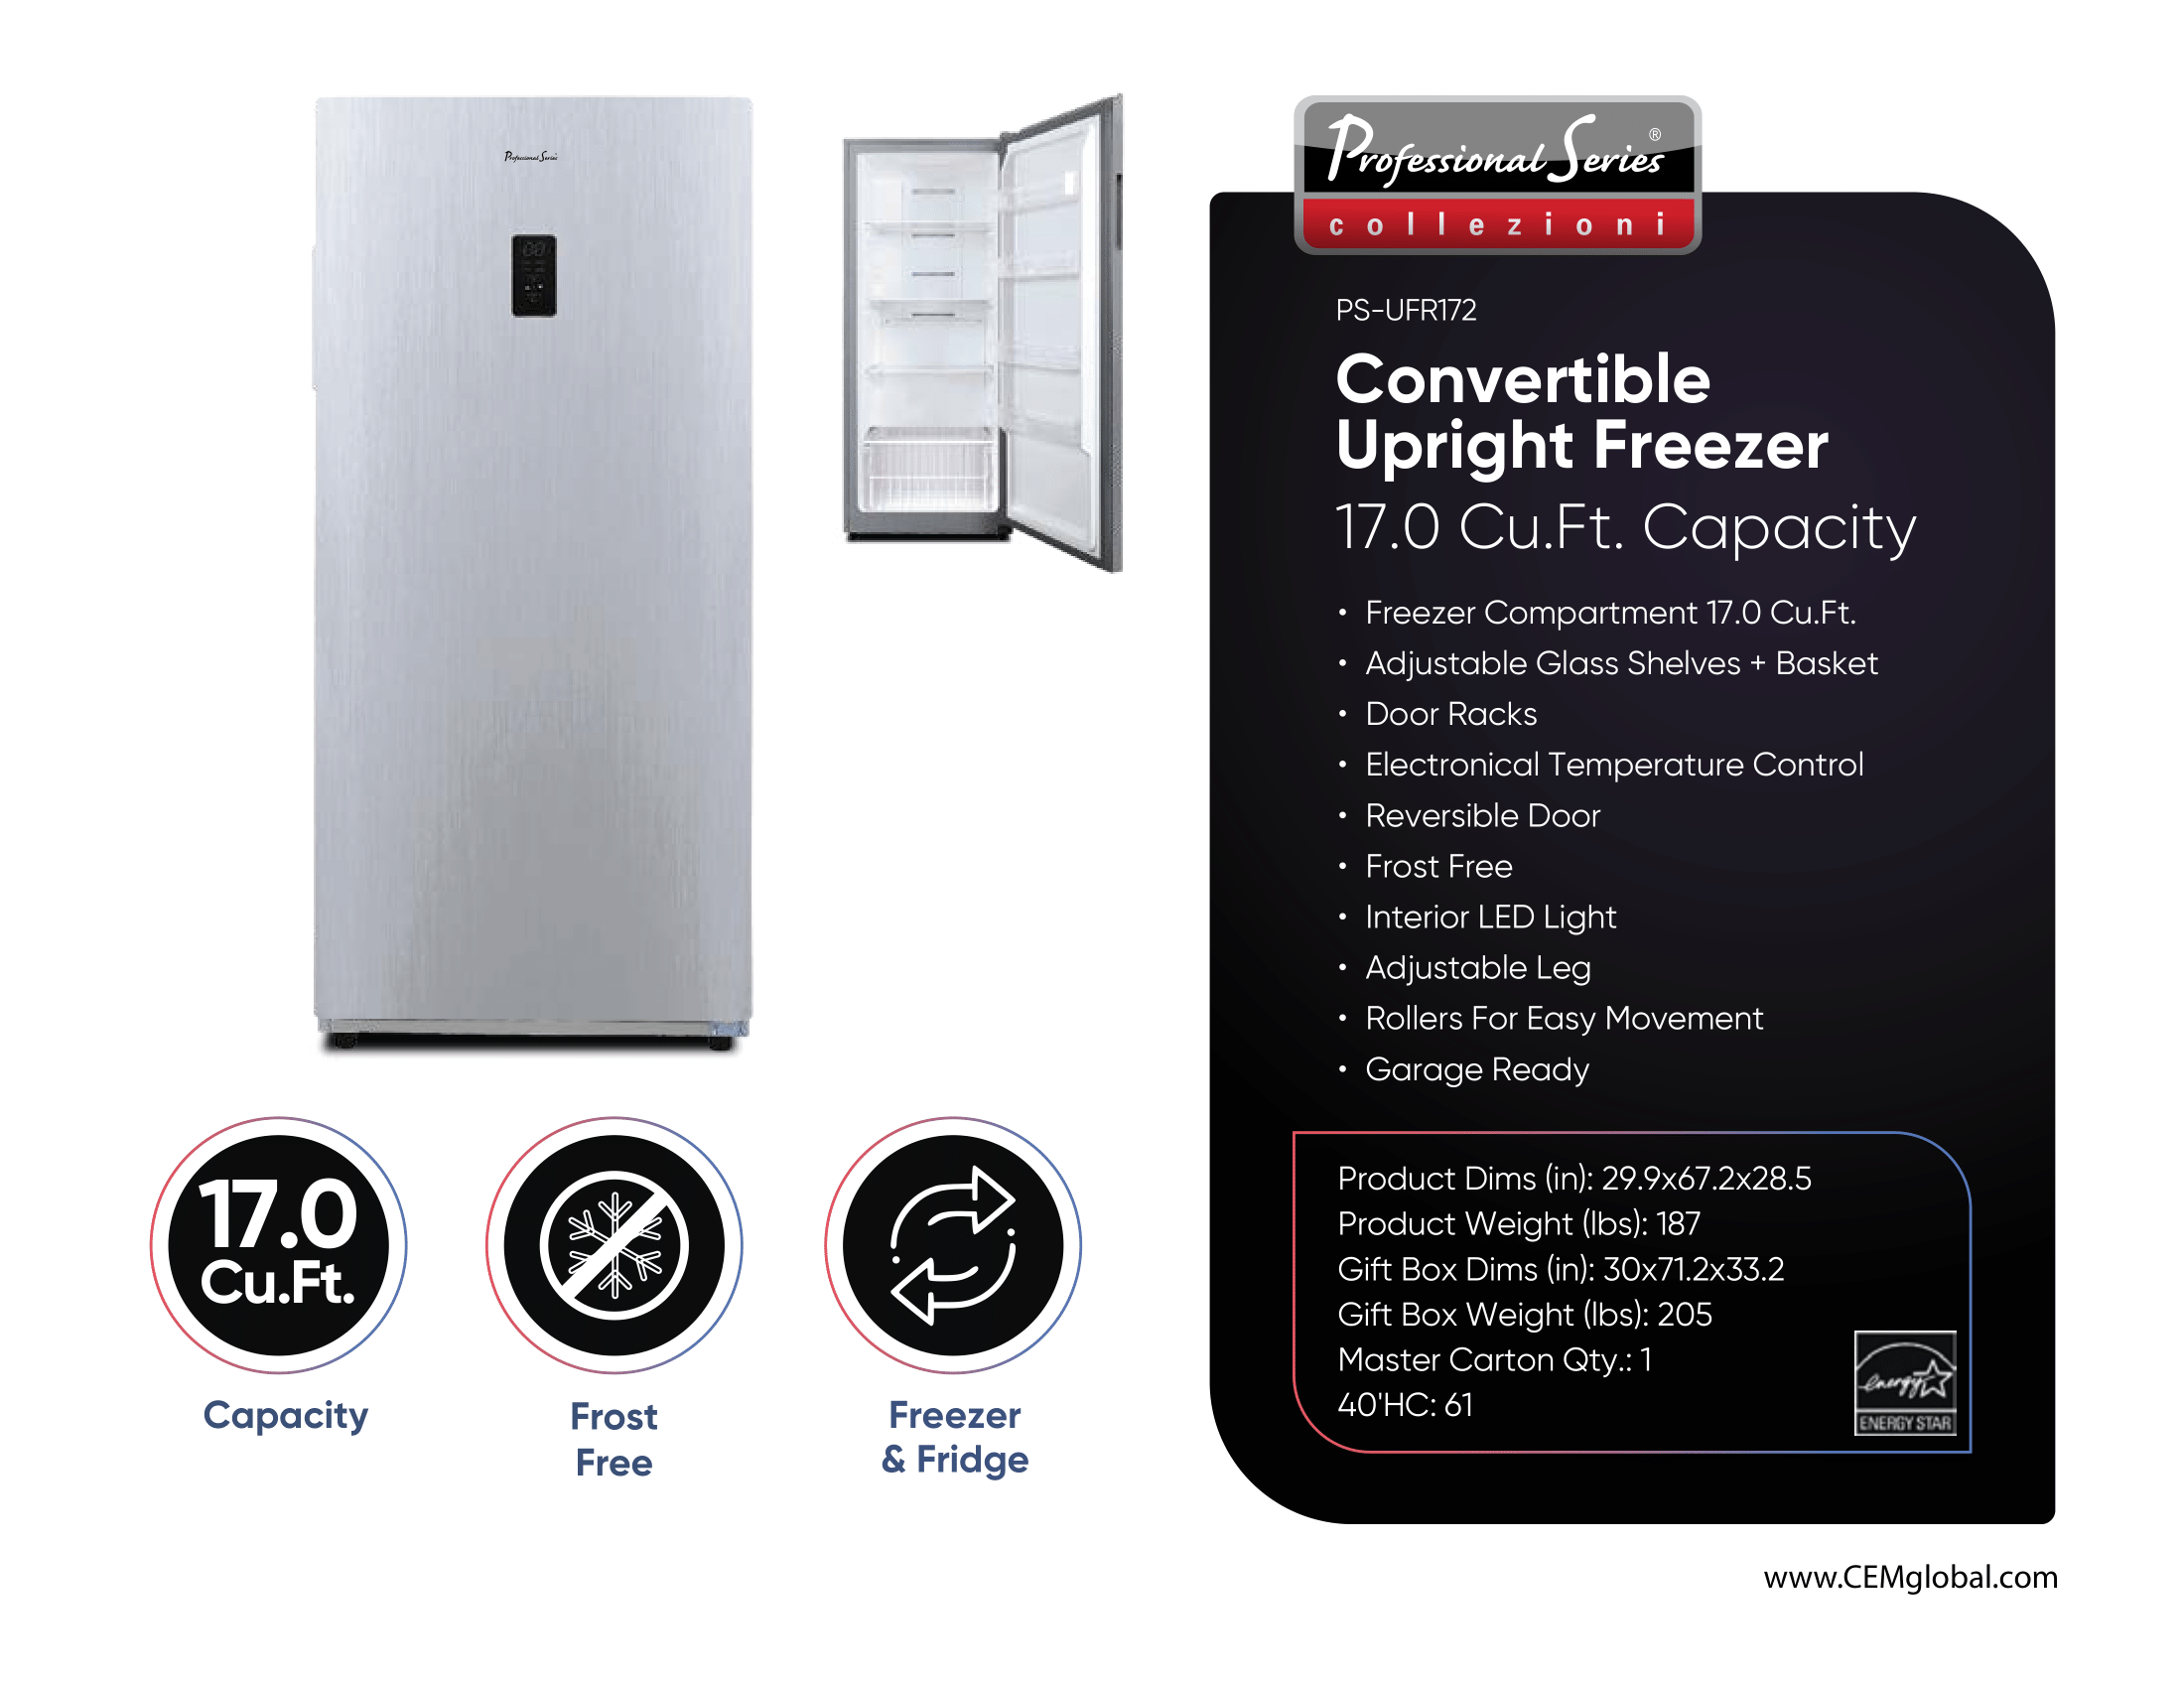 Convertible Upright Freezer 17.0 Cu.Ft.